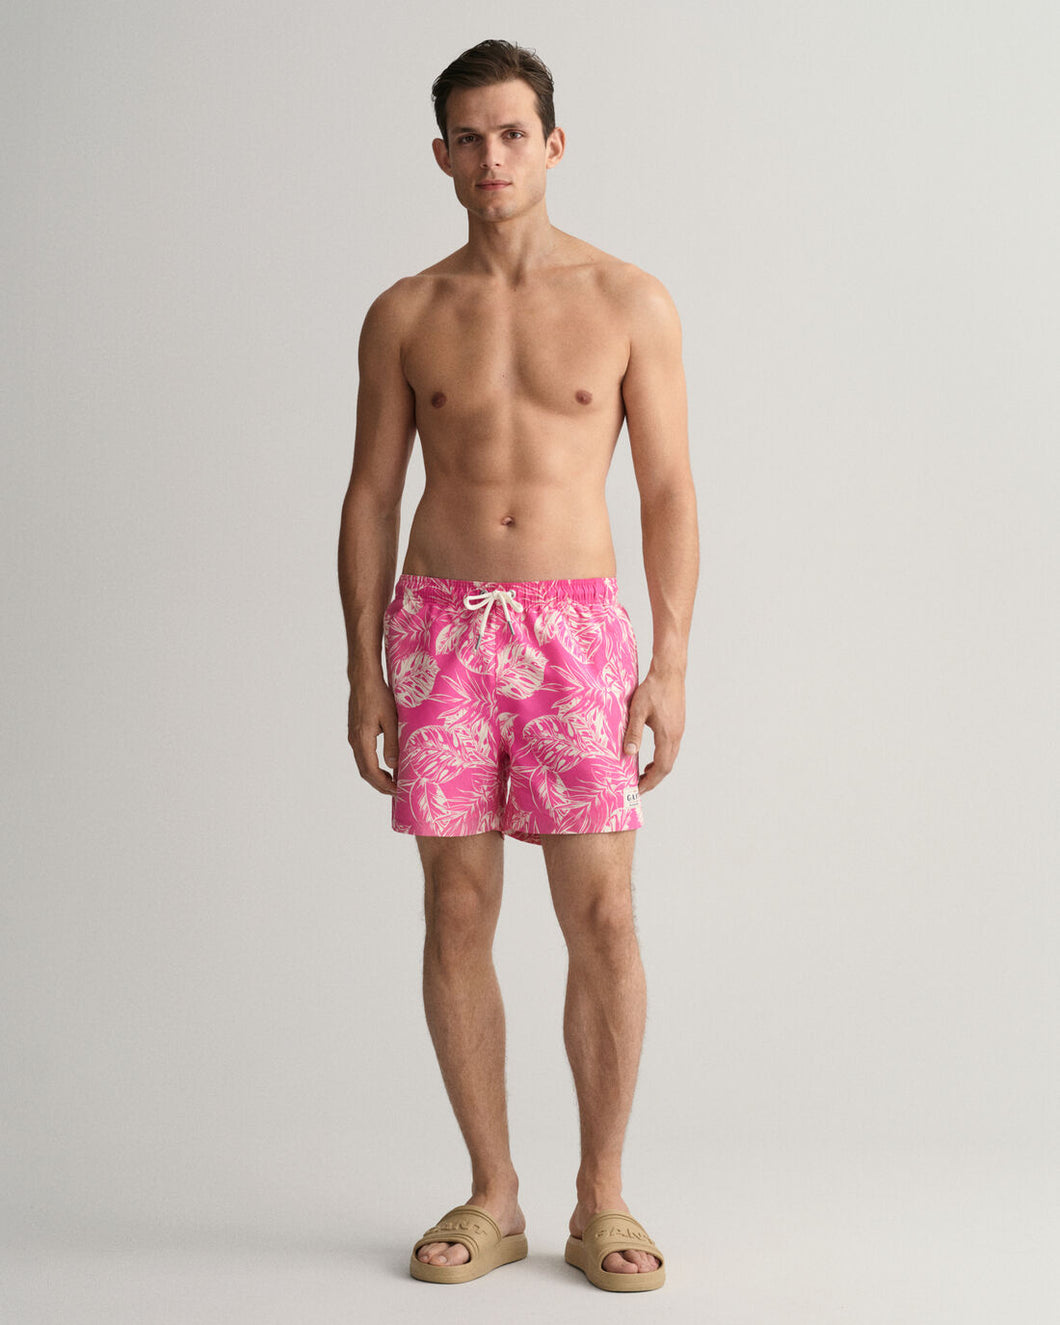 GANT - CF Tropical Leaves Print SW Shorts, Perky Pink